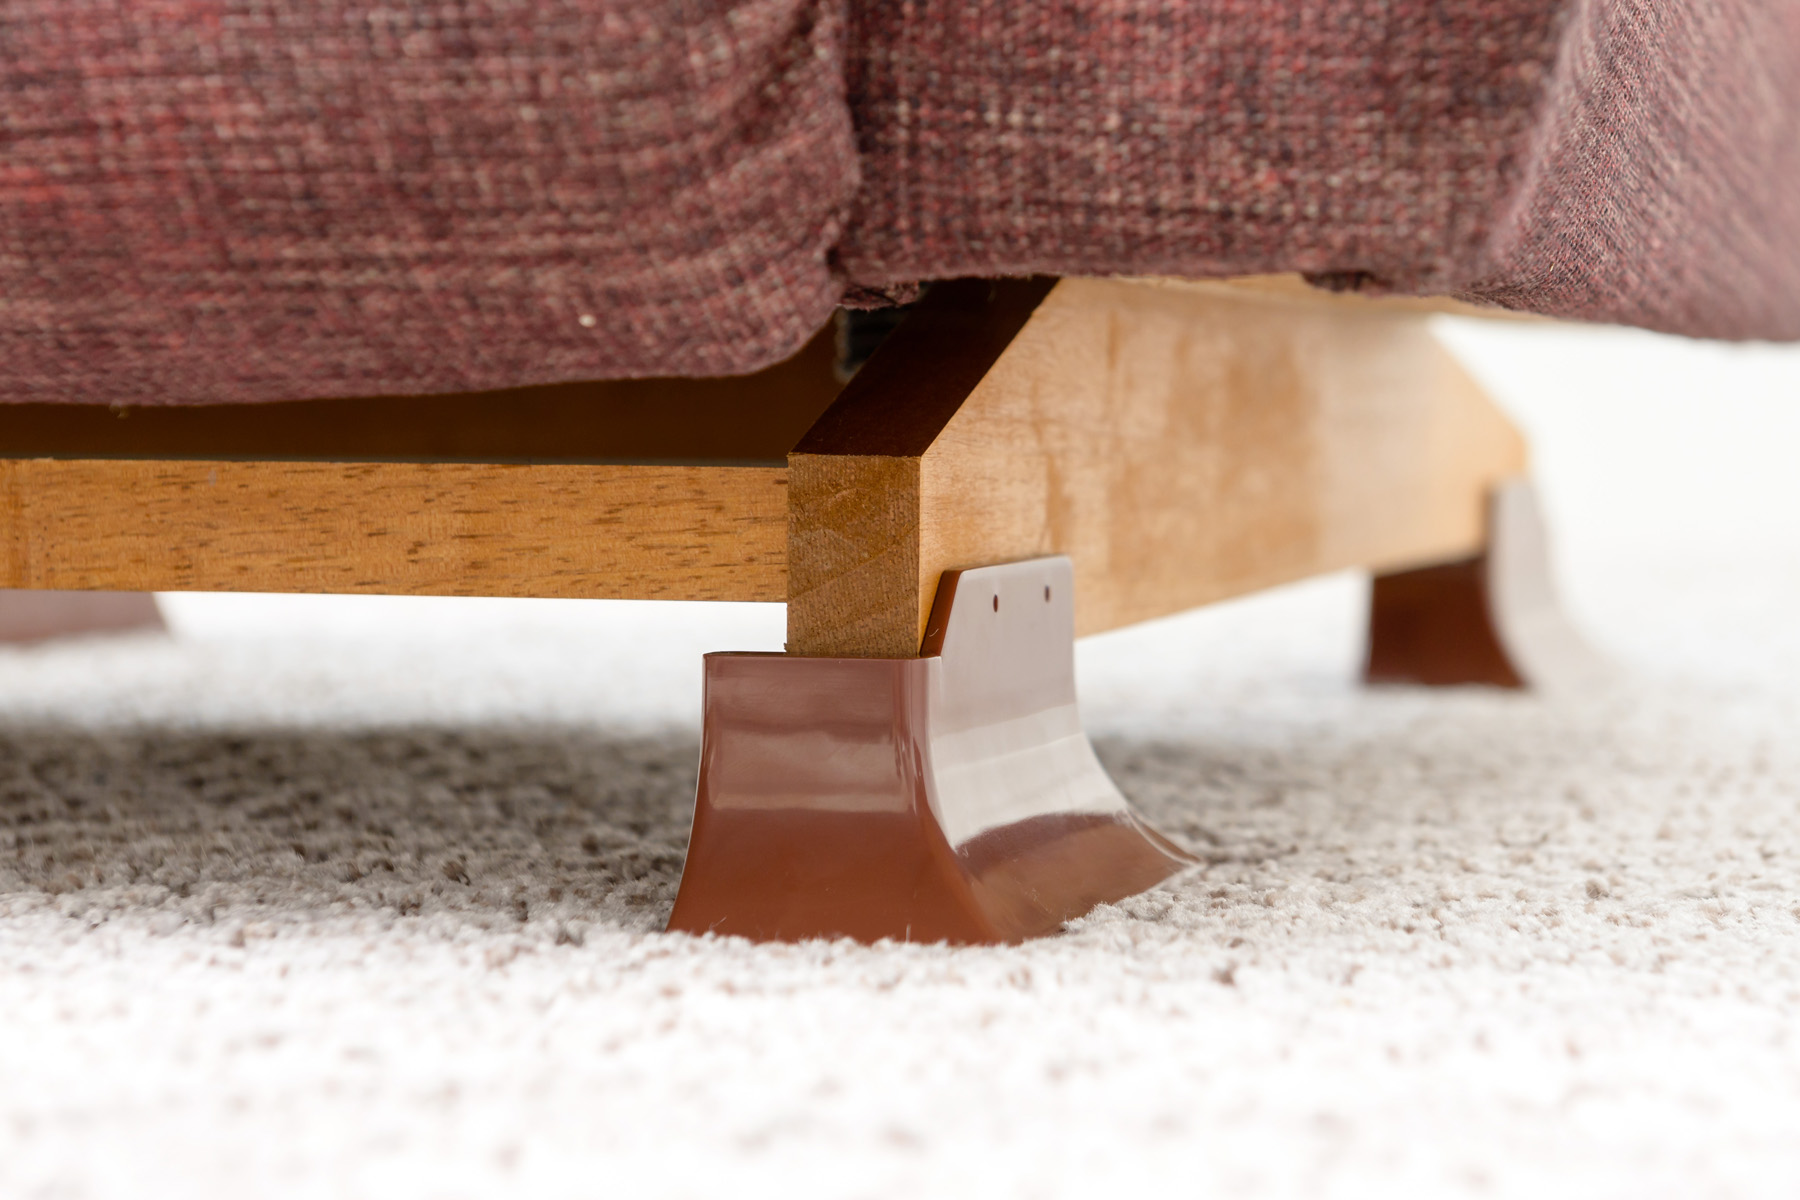 Stander Recliner Riser S Fall, What Do You Put Under Recliner On Hardwood Floors